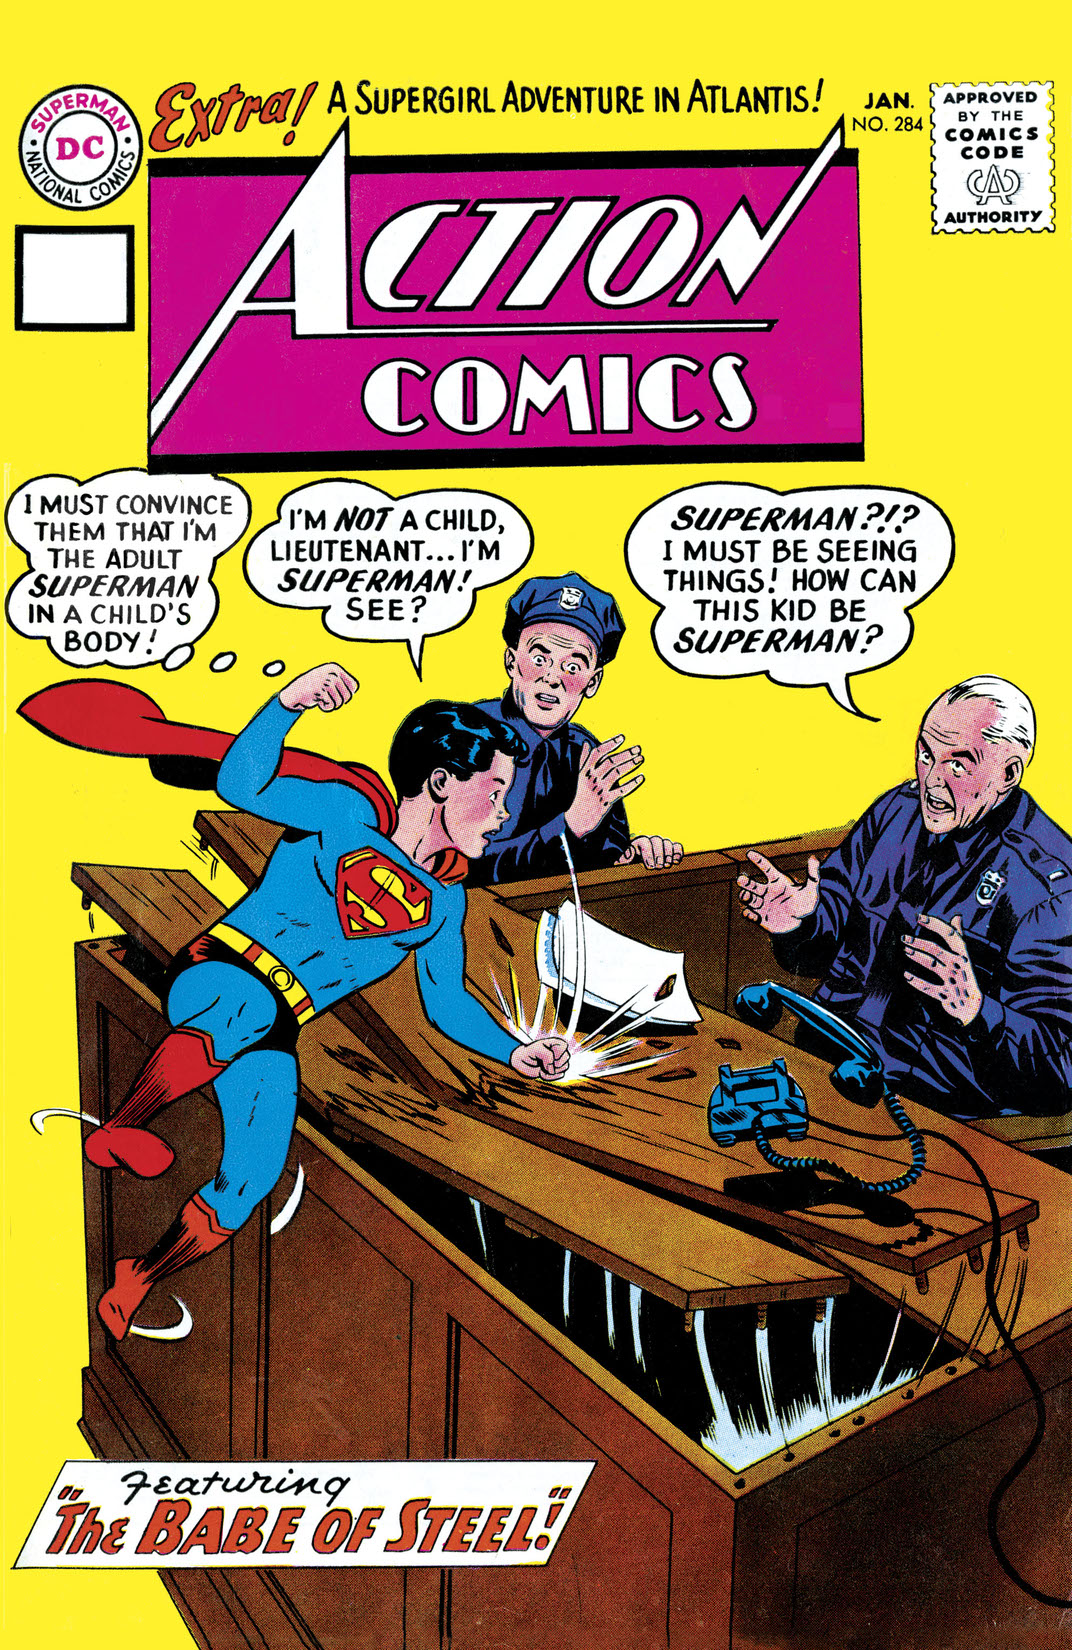 Action Comics (1938-) #284 preview images